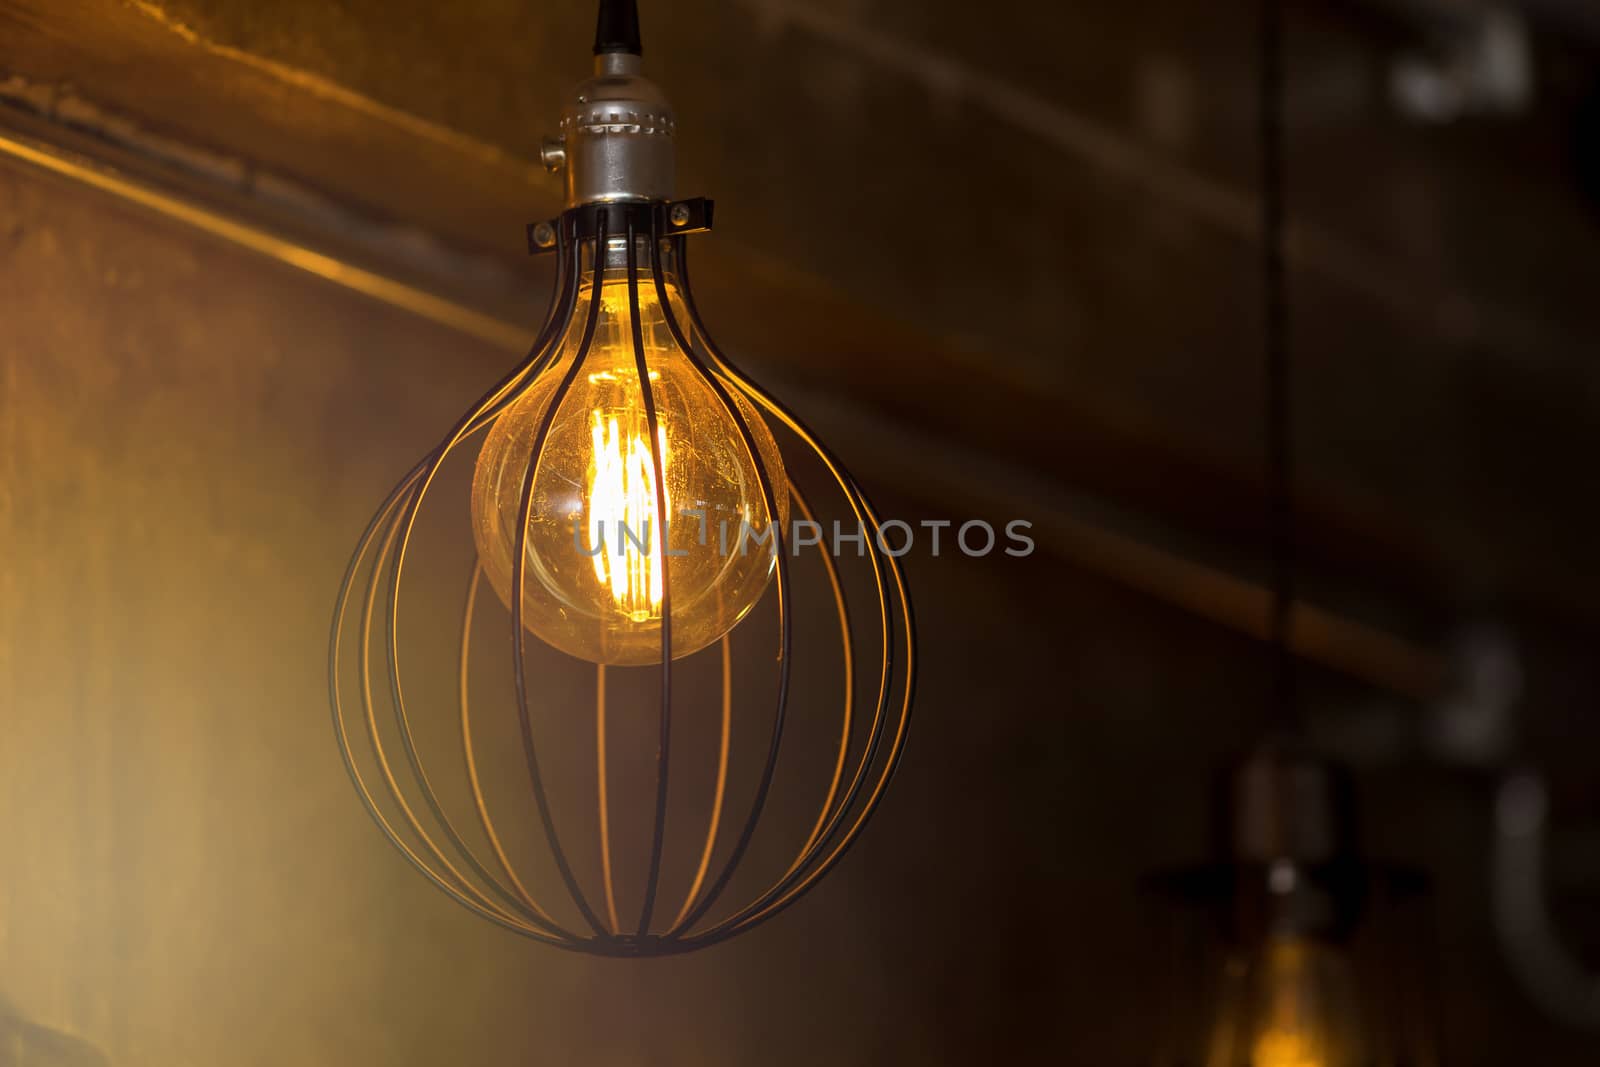 Decorative antique edison style light bulbs against brick wall background.